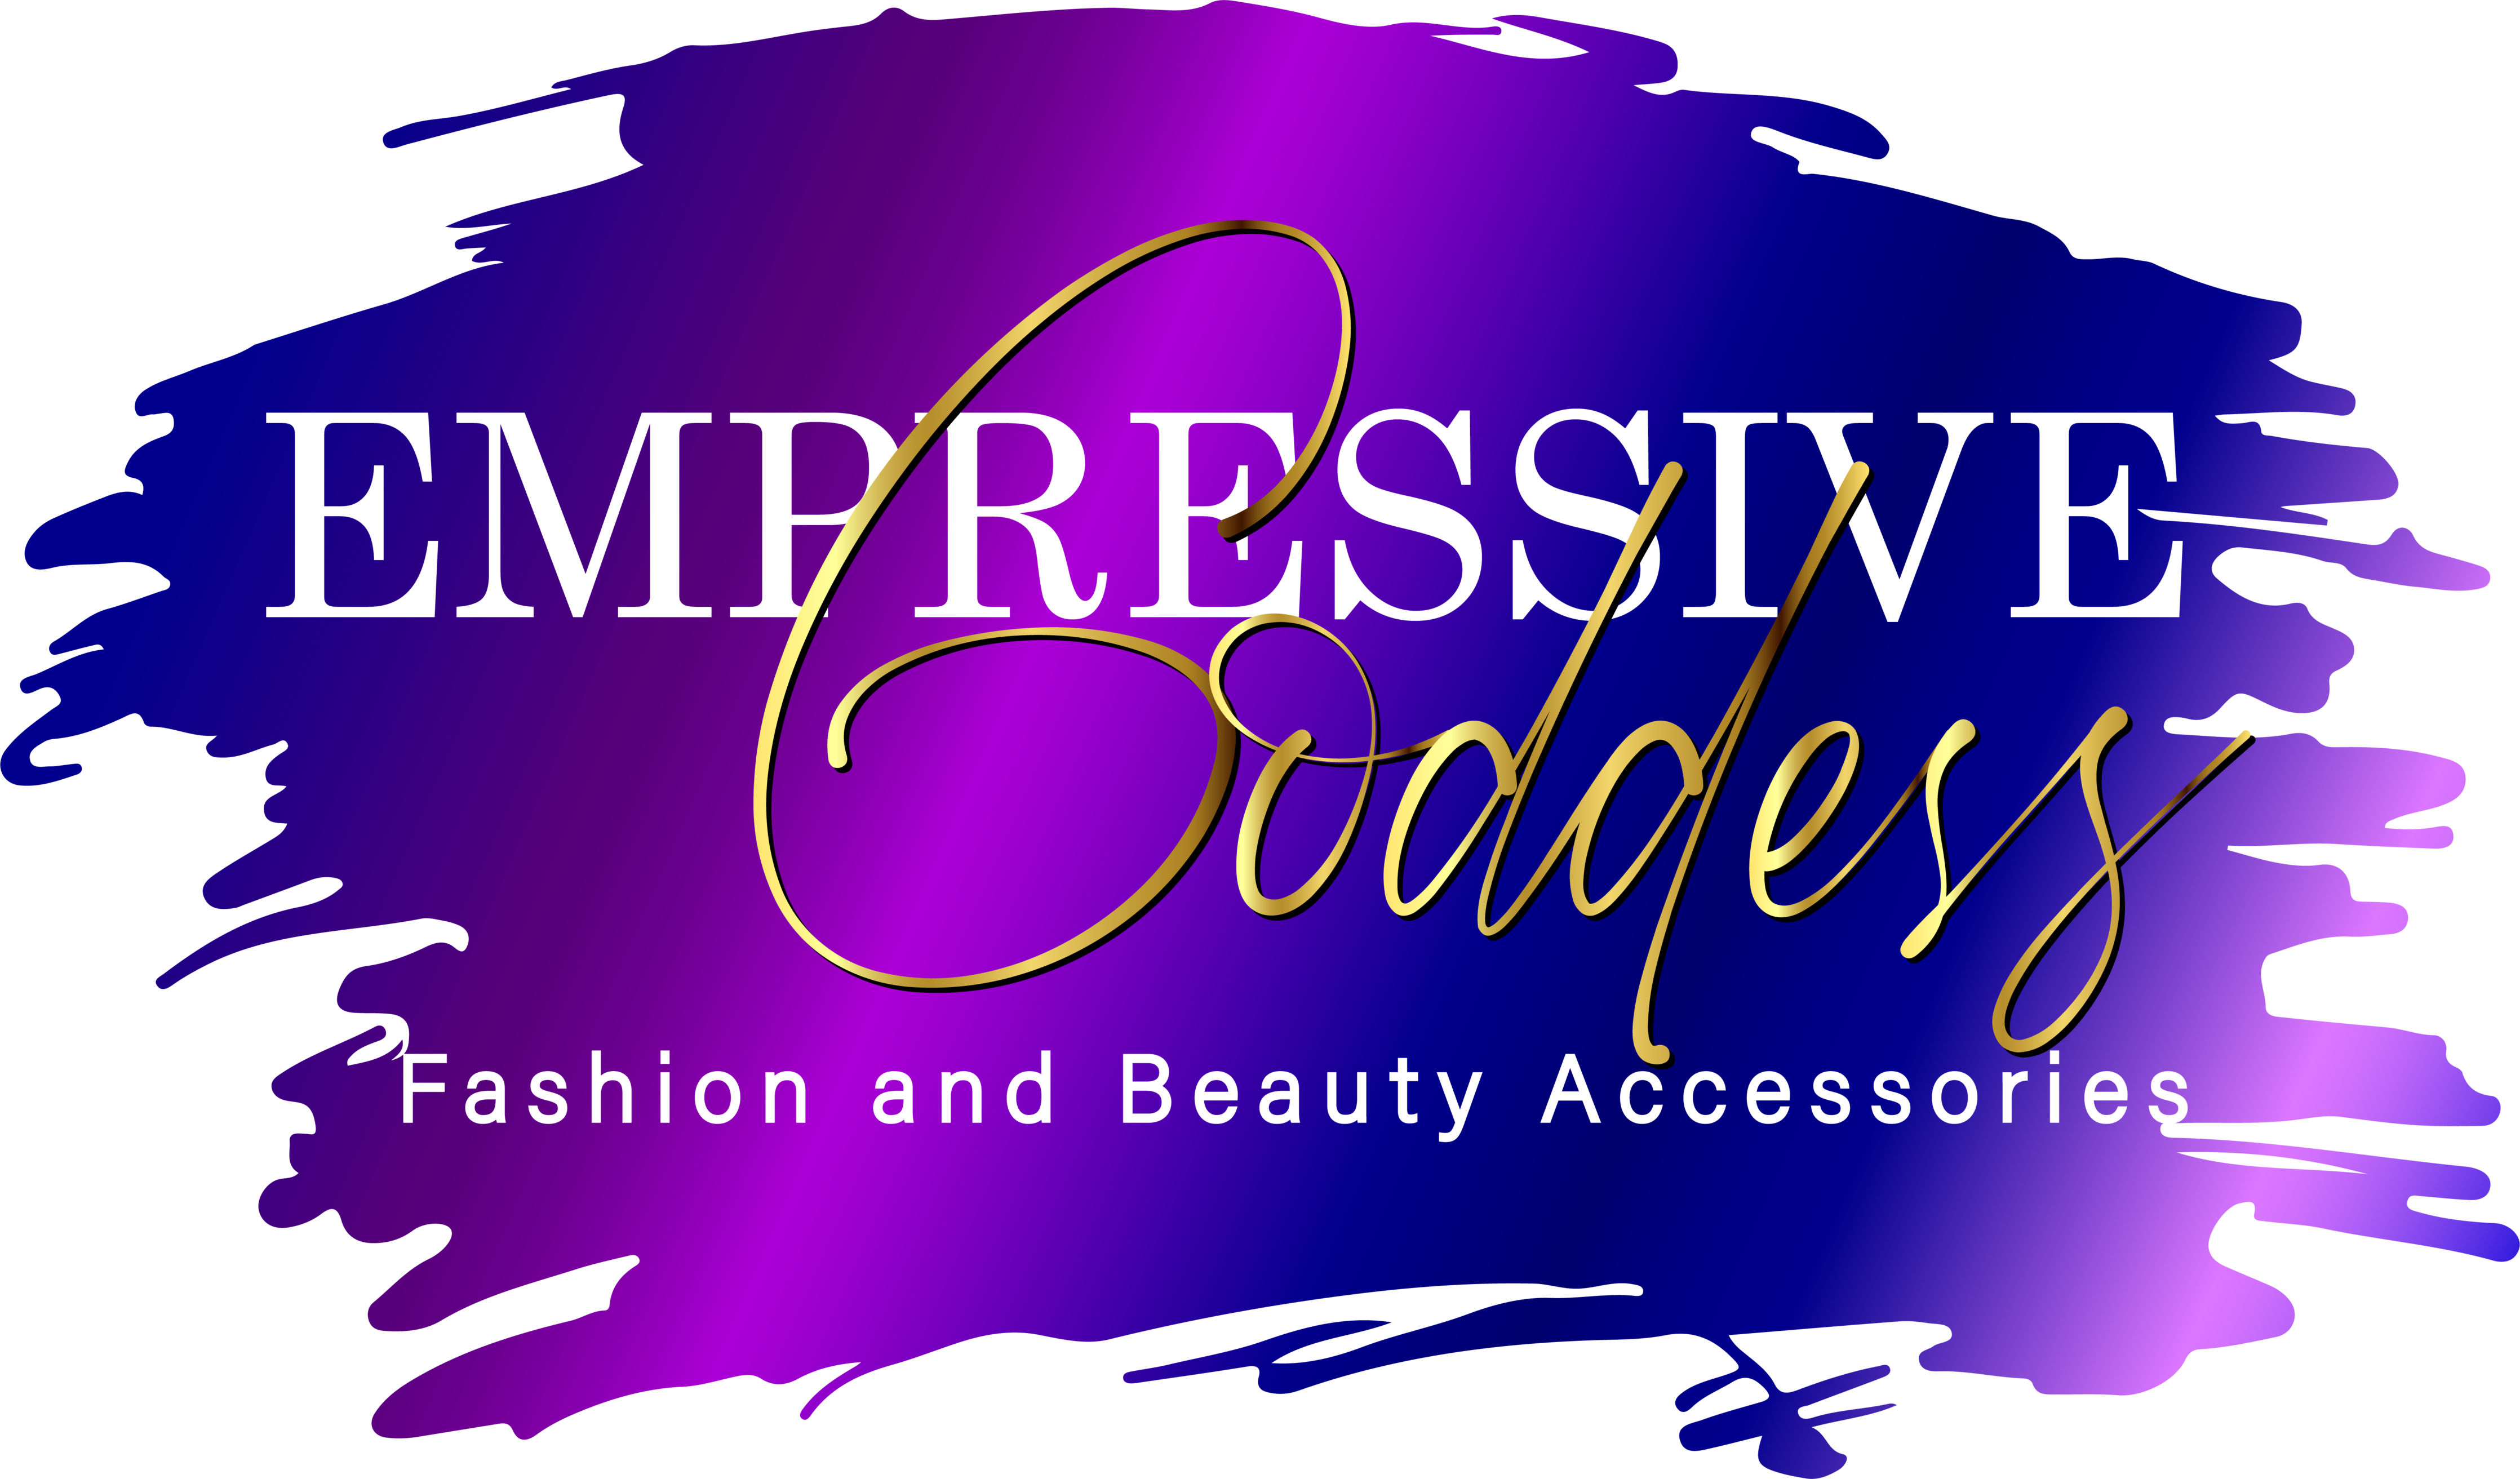 Empressive Goddess Fashion and Beauty Accessories